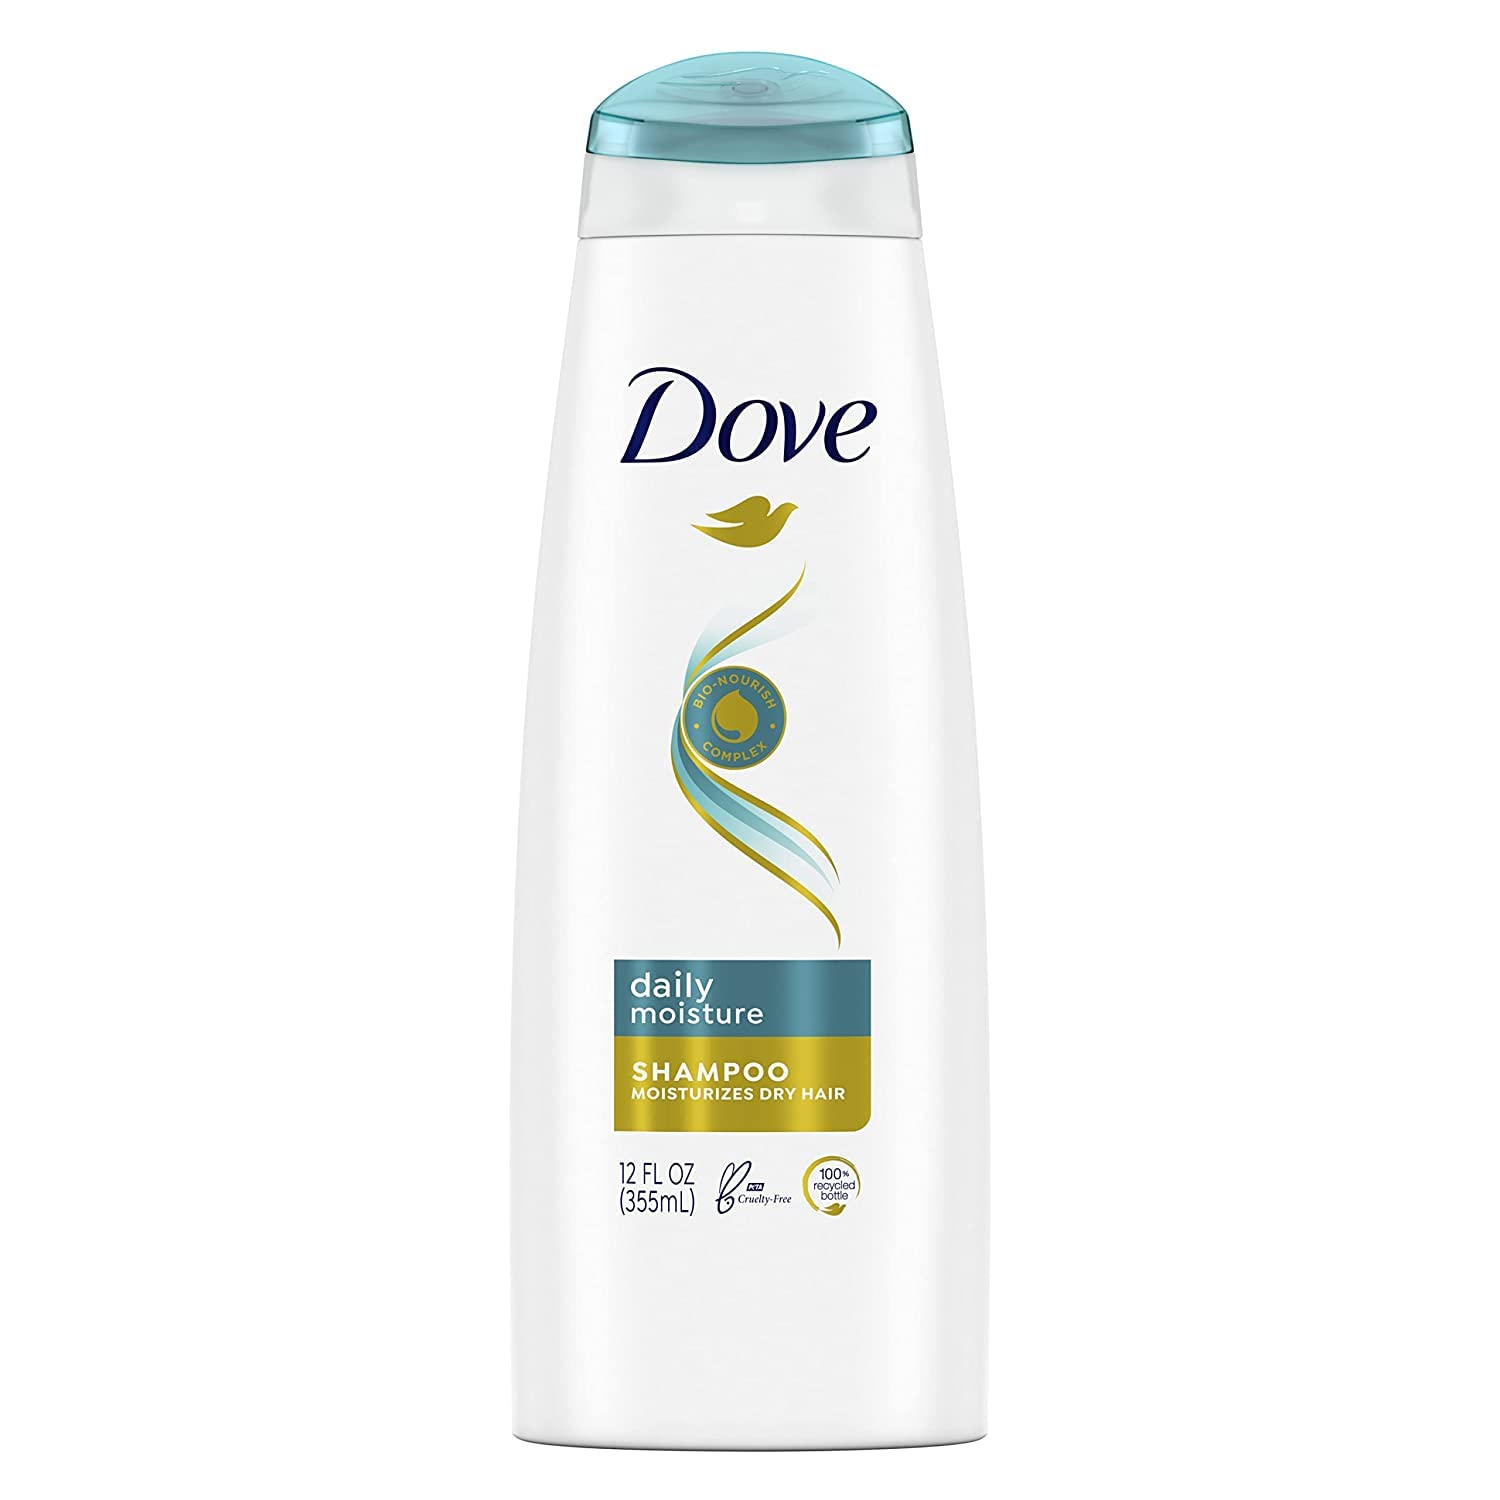 szampon dove 250 ml cena